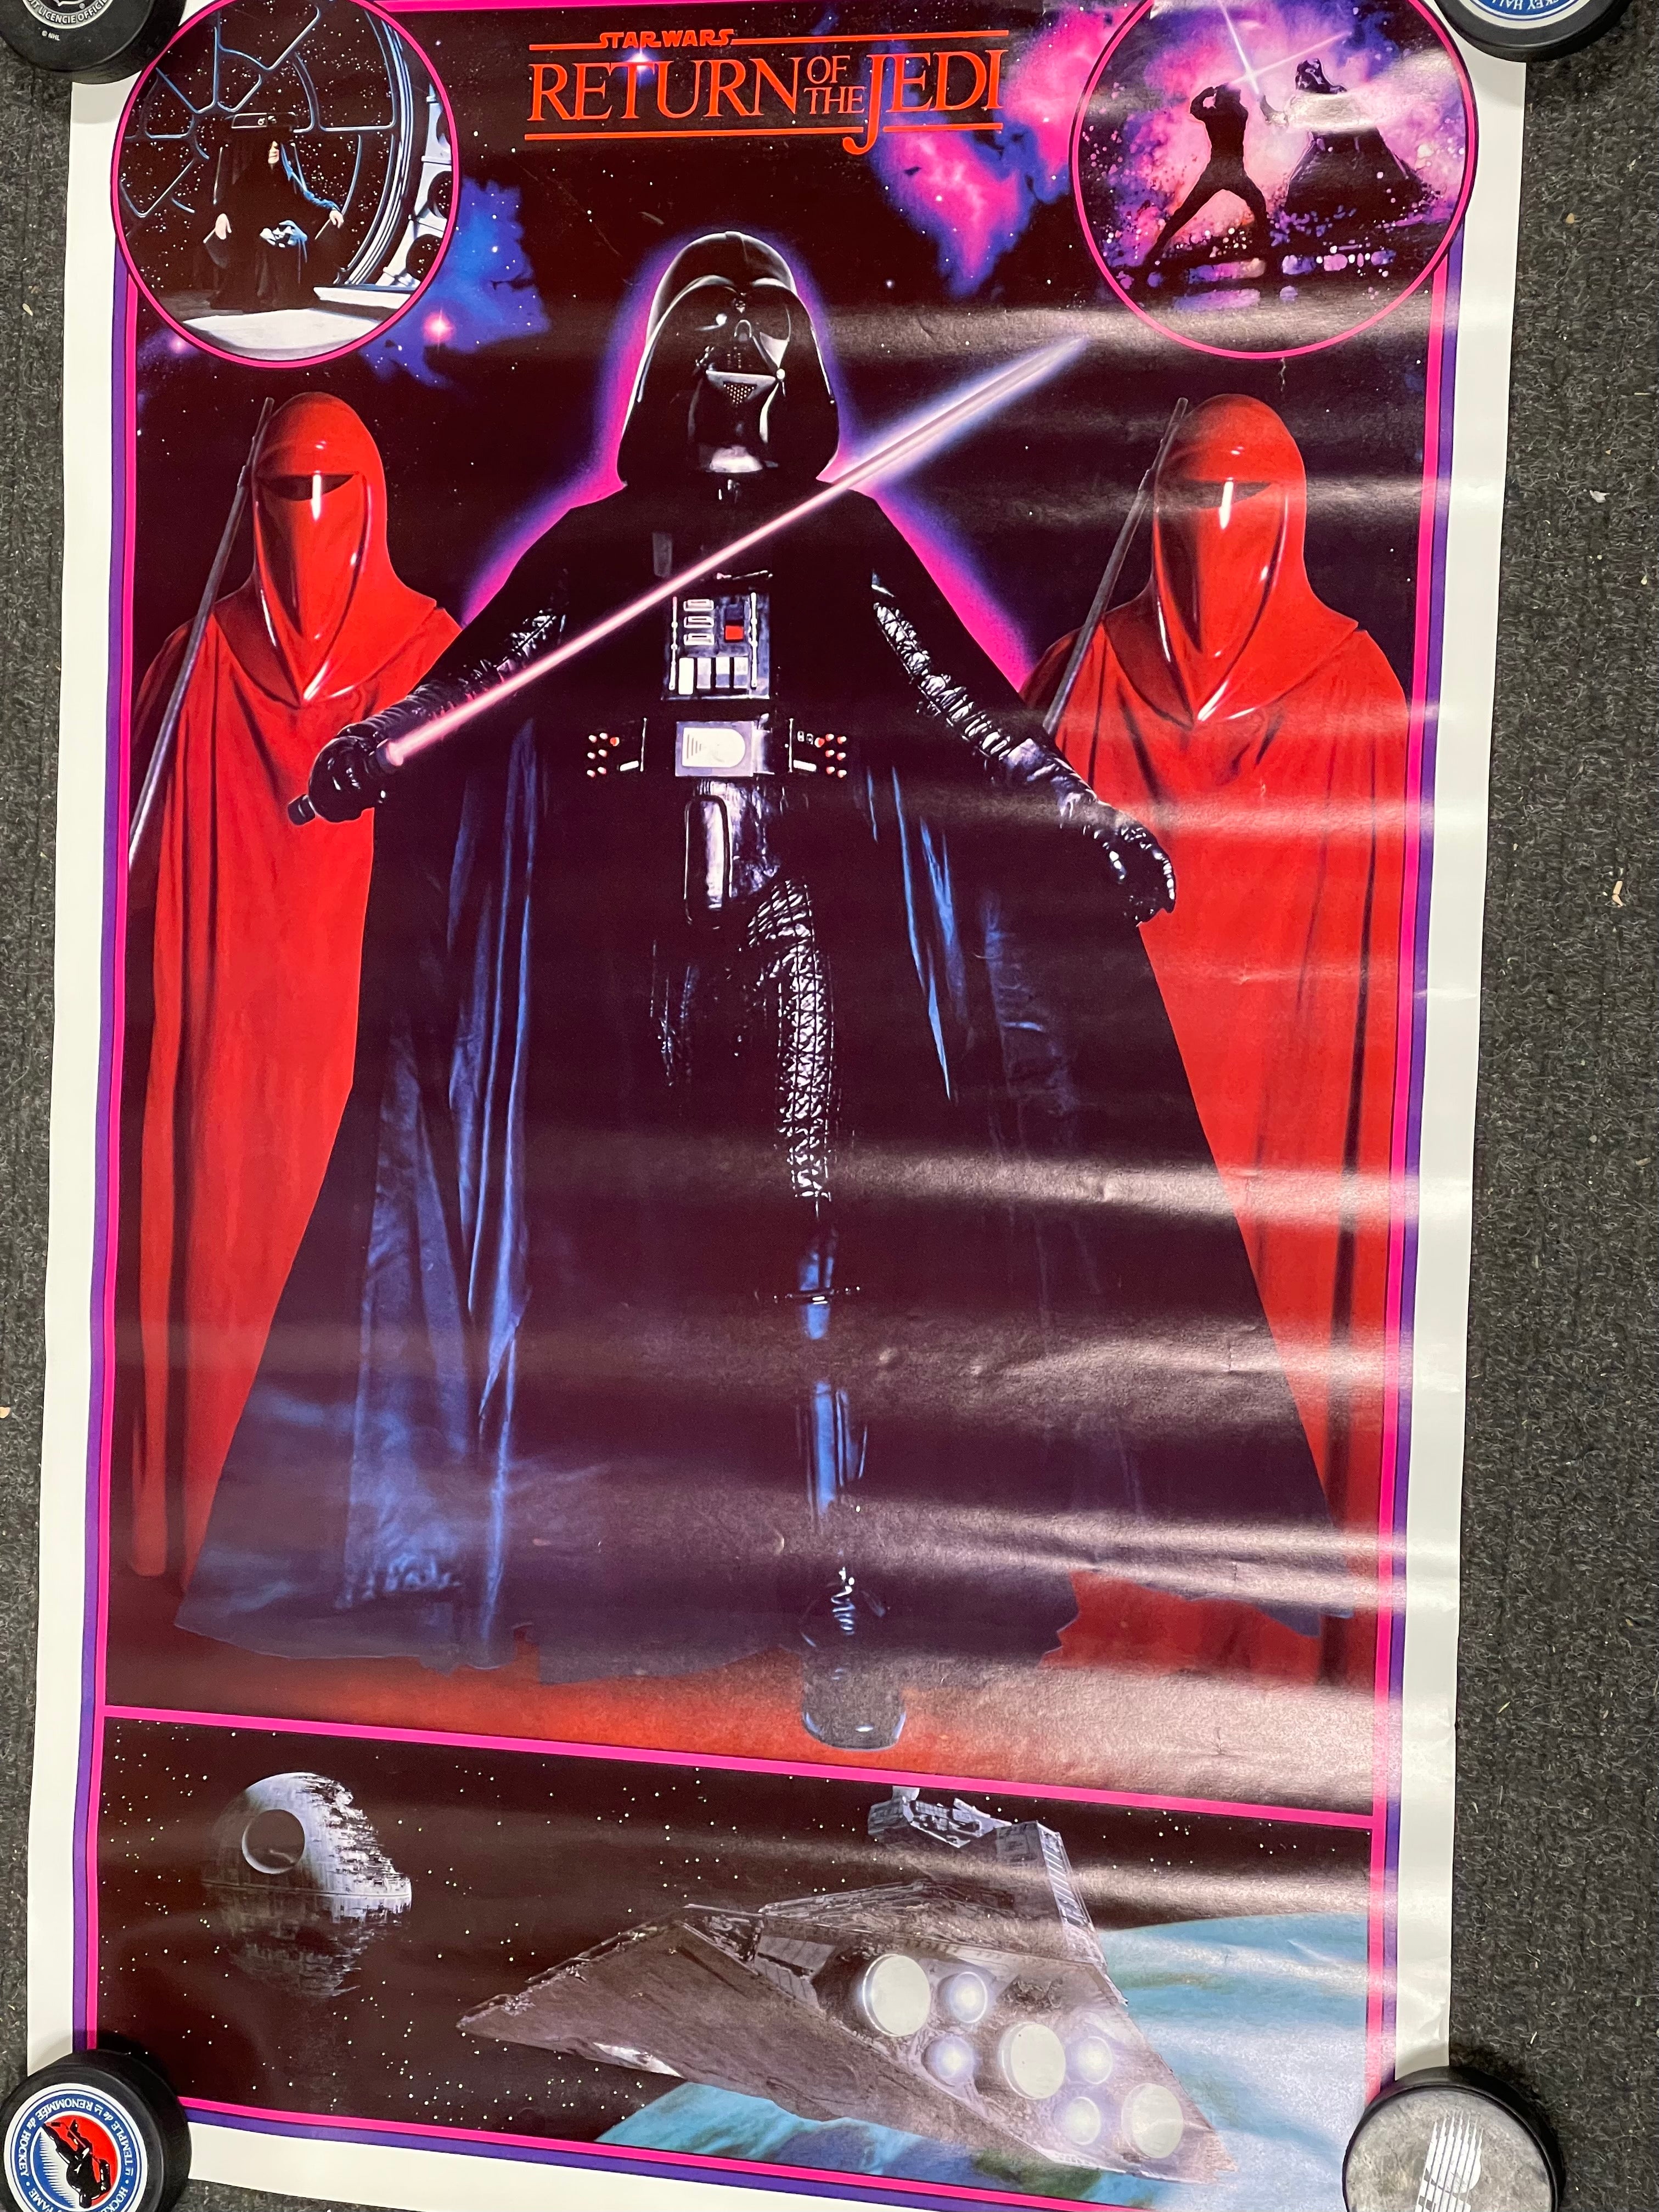 Star Wars Return of the Jedi original movie poster 1983